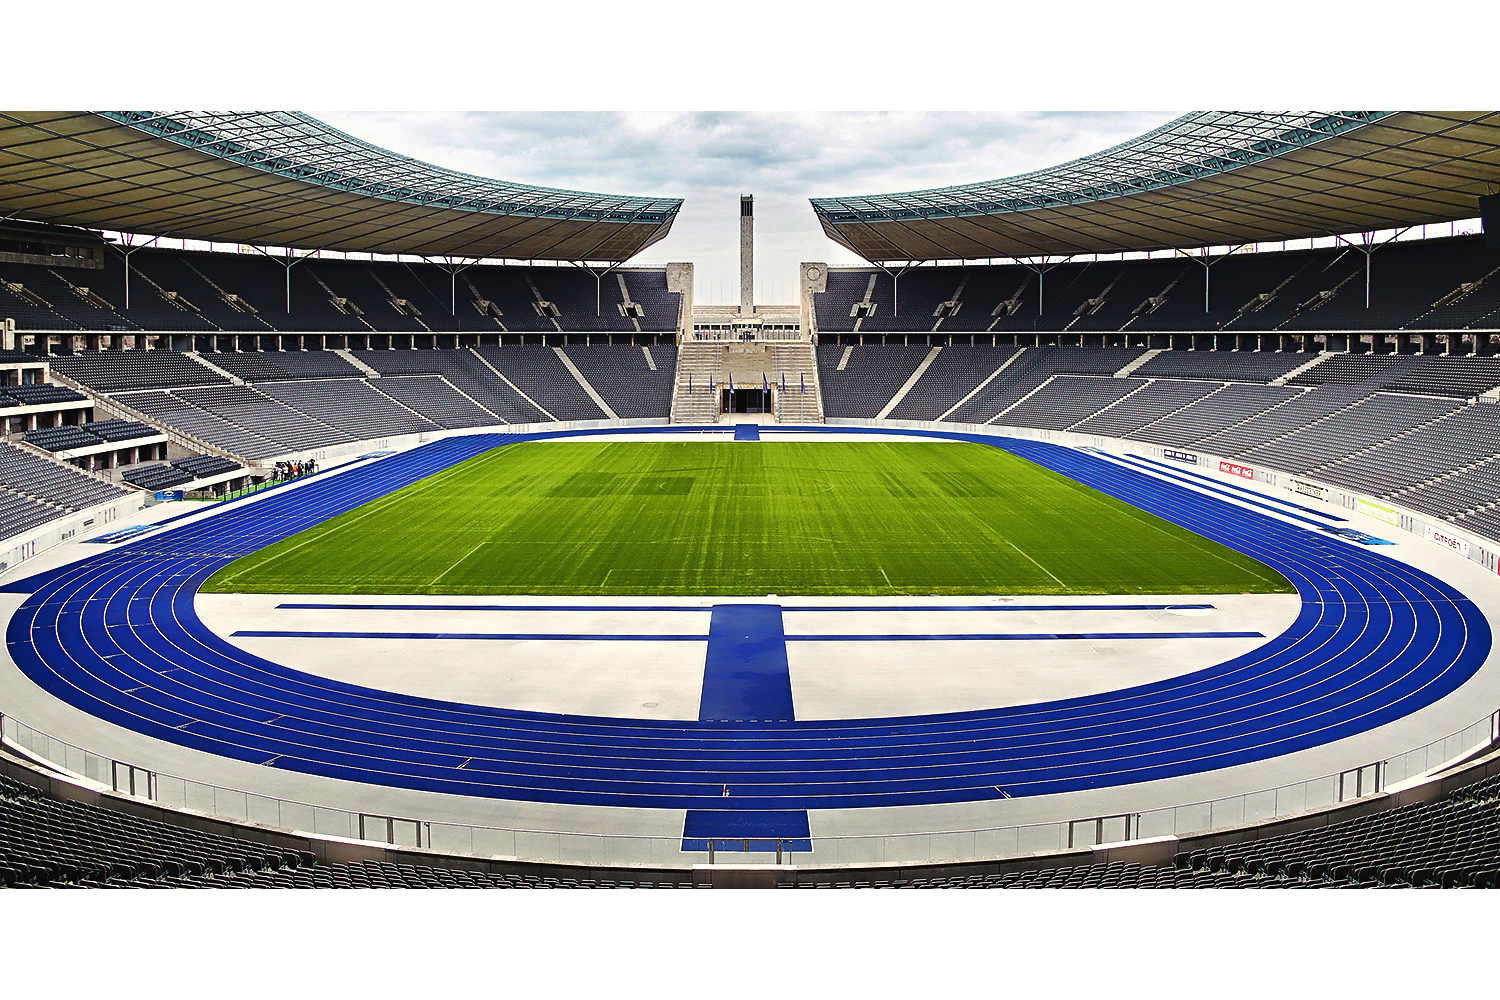 Architectural photography interior: Olympiastadion (Olympic stadium) Berlin, Deutschland. Architects: Werner March/Albert Speer, Friedrich Wilhelm Krahe. Image (C) Matthewlingphotography.co.uk